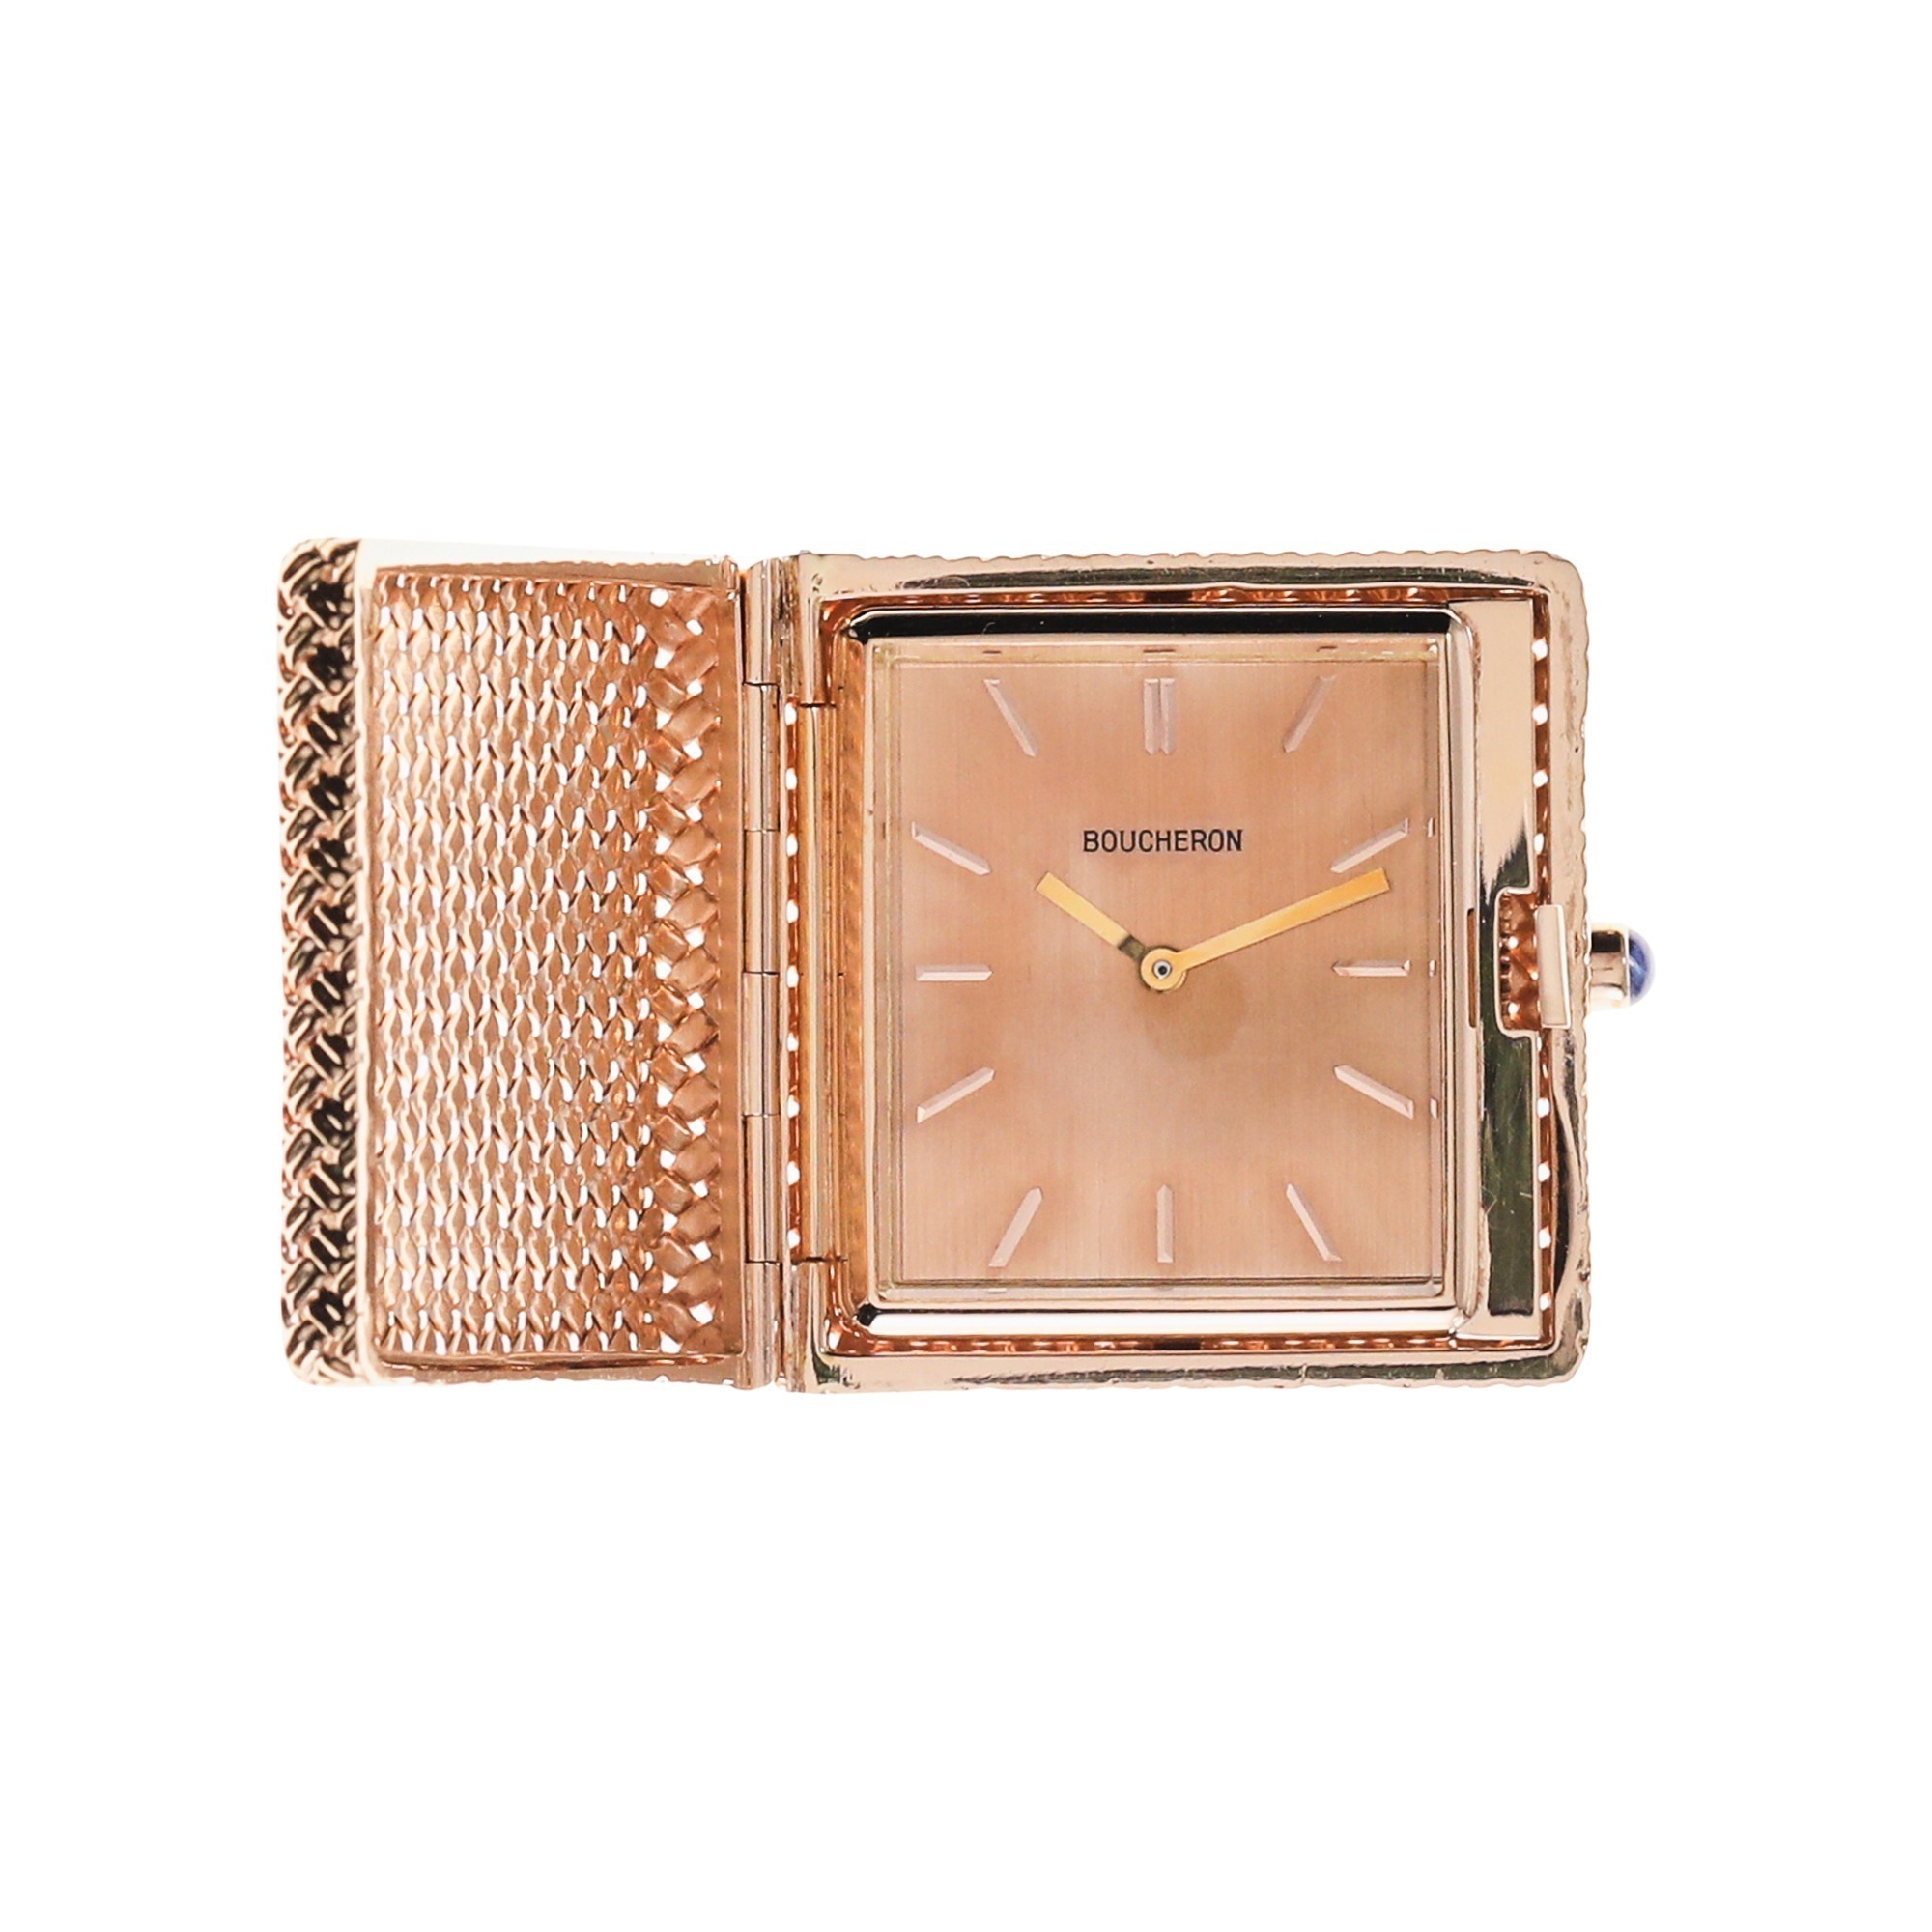 Boucheron 18K Gold Basket Weave Case Purse Watch